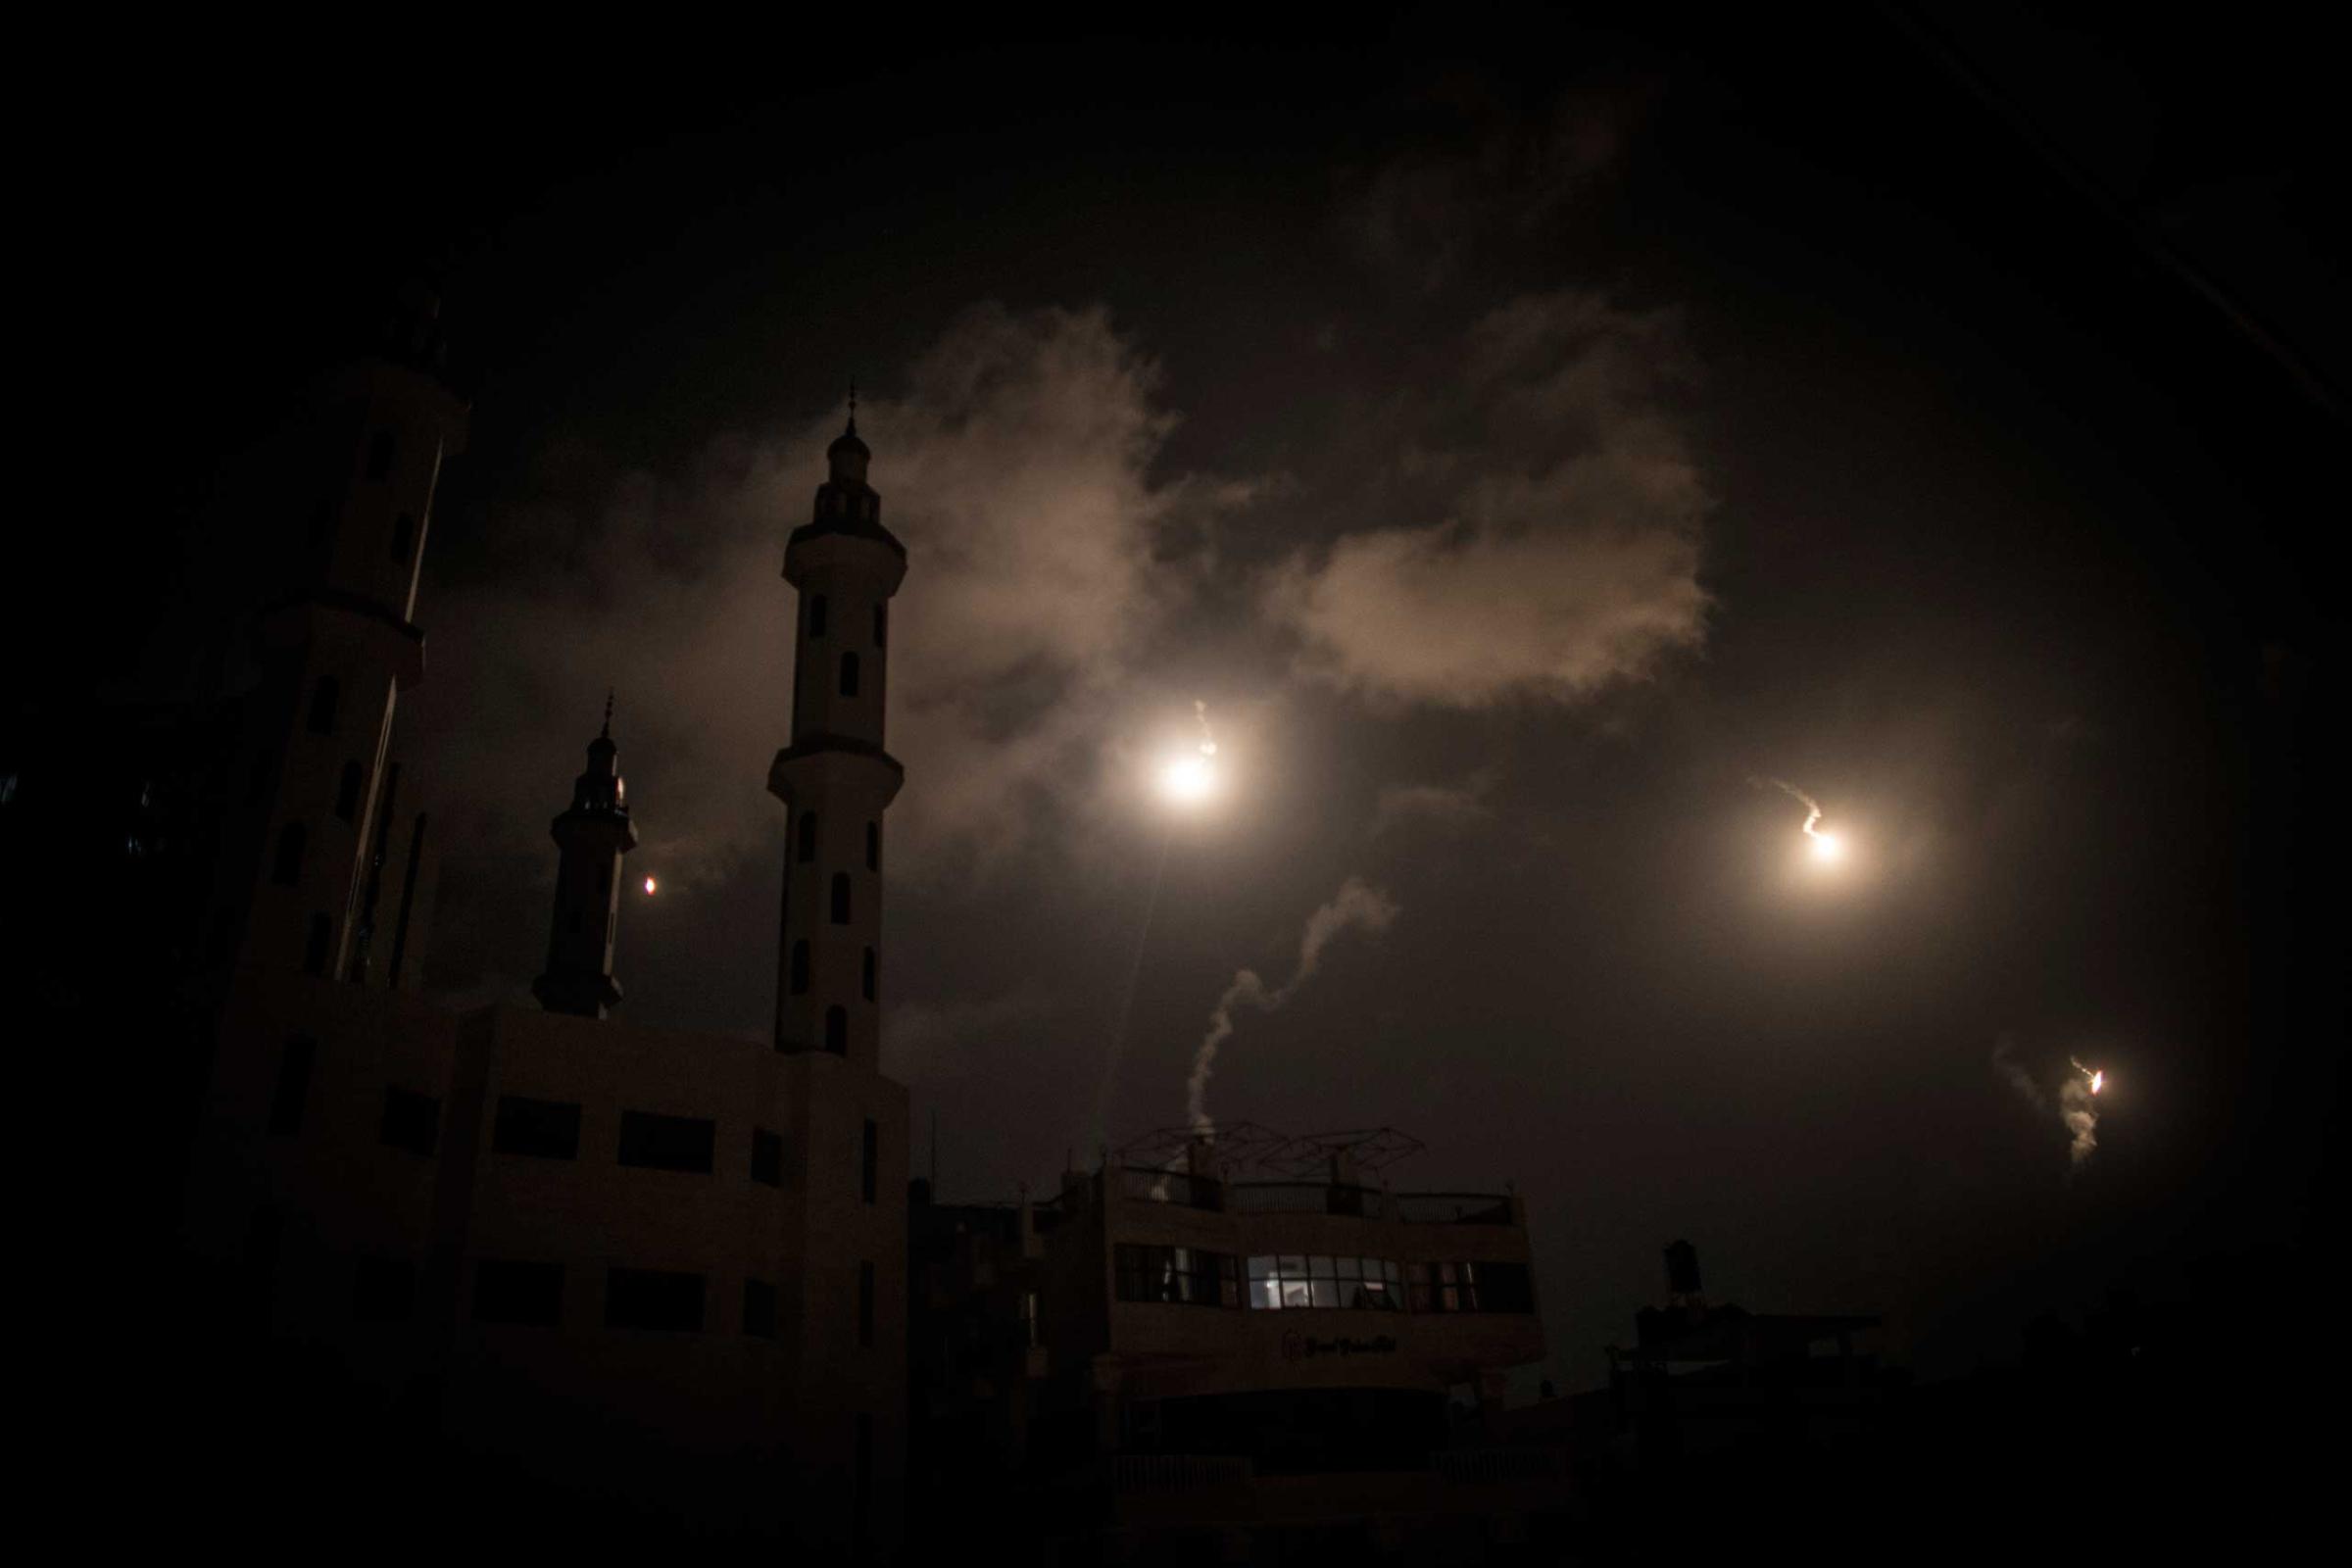 Illumination flares shot by Israeli Defense forces illuminate the minaret of a mosque in Gaza City